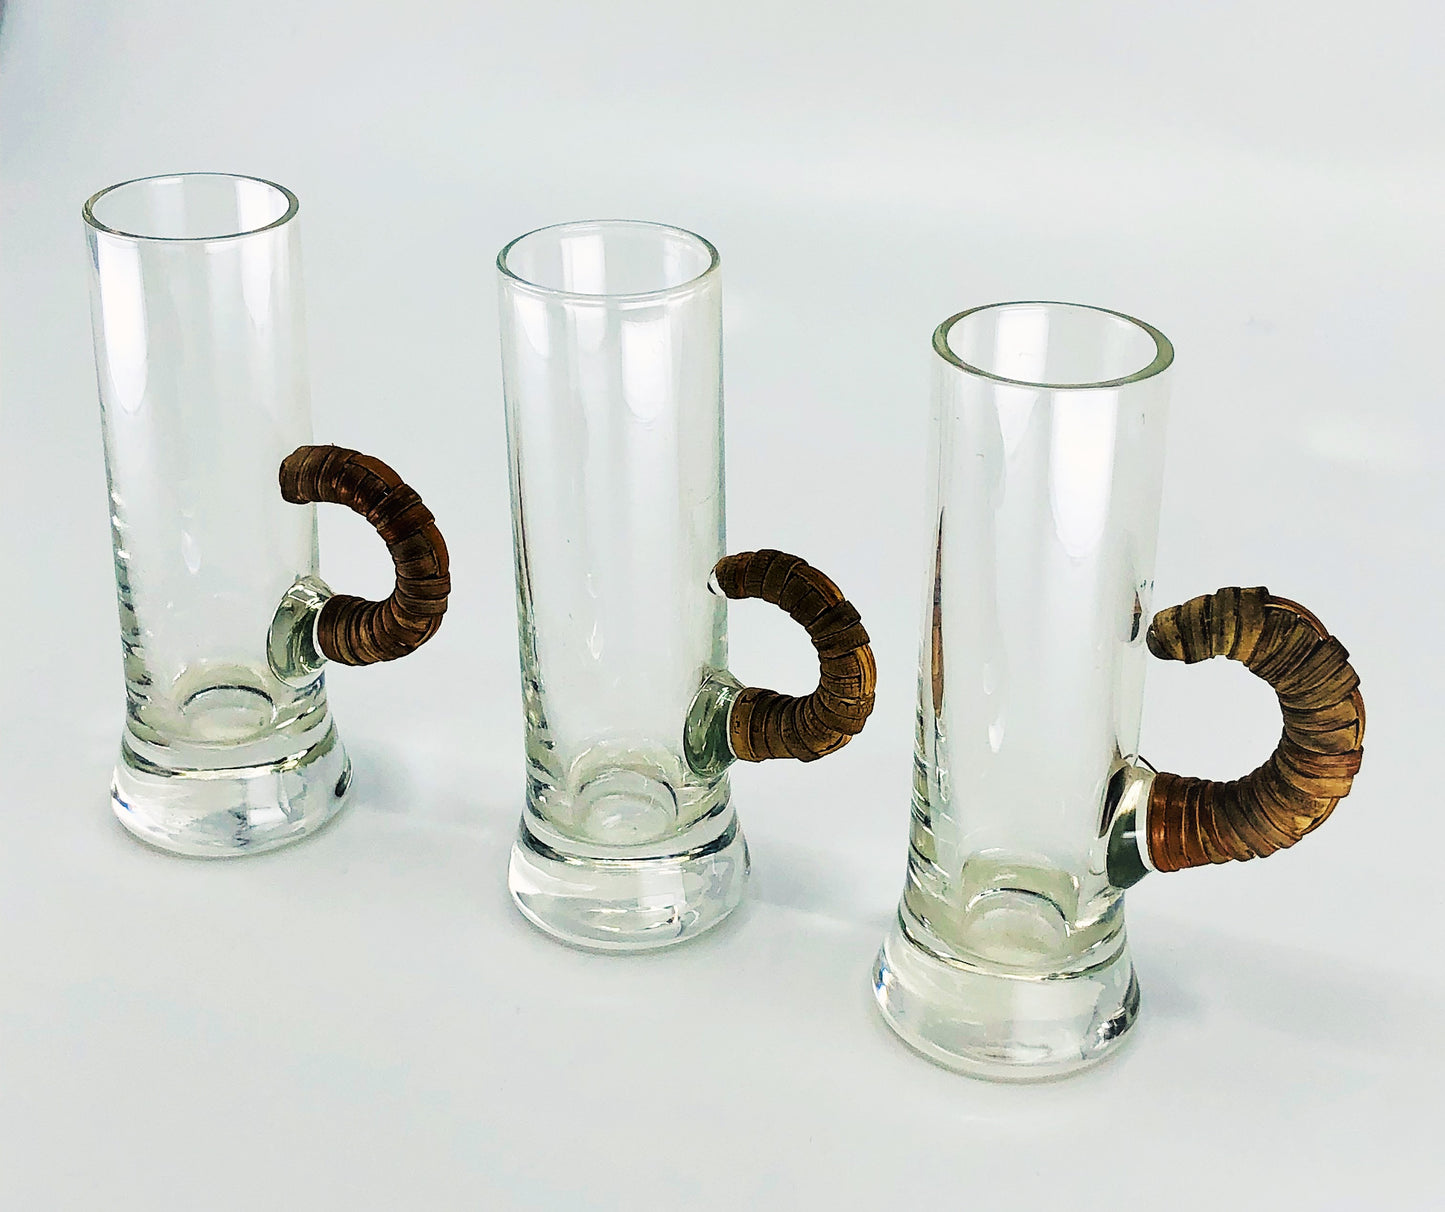 Retro Scandinavian Style Shot Glasses with Wicker Handles, Set of 3